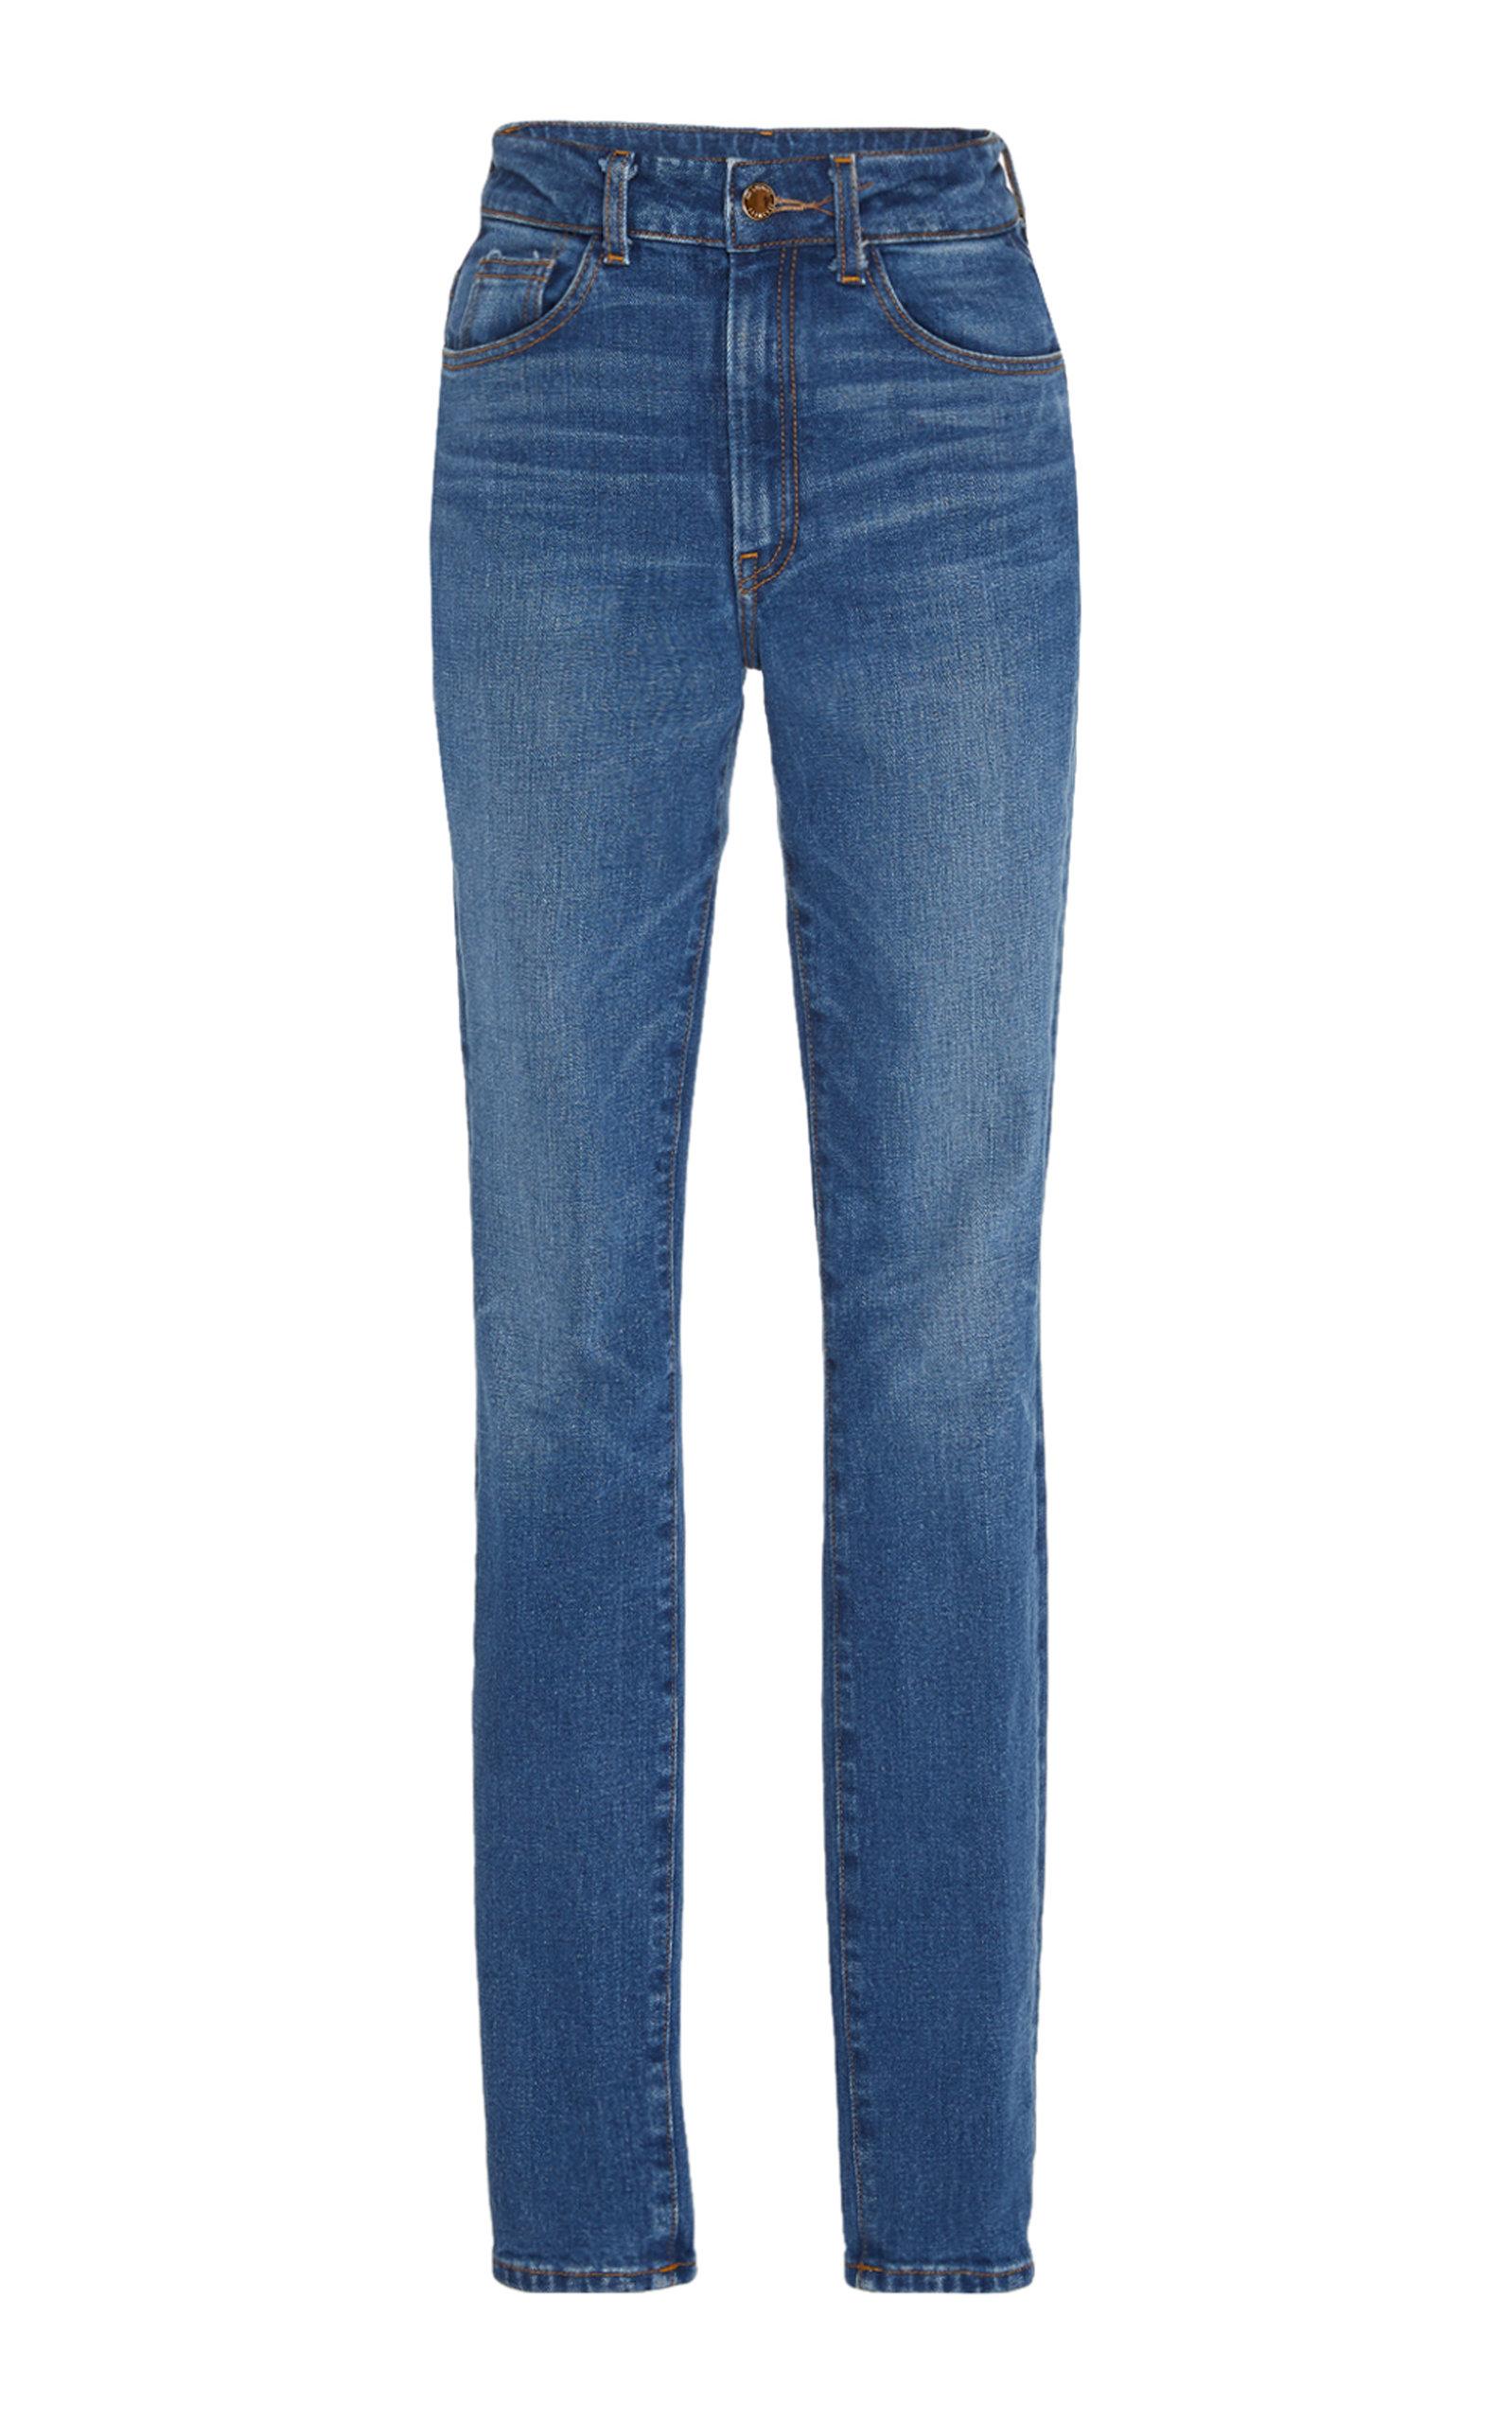 Brandon Maxwell Denim Mid-rise Skinny Jeans in Dark Wash (Blue) - Lyst